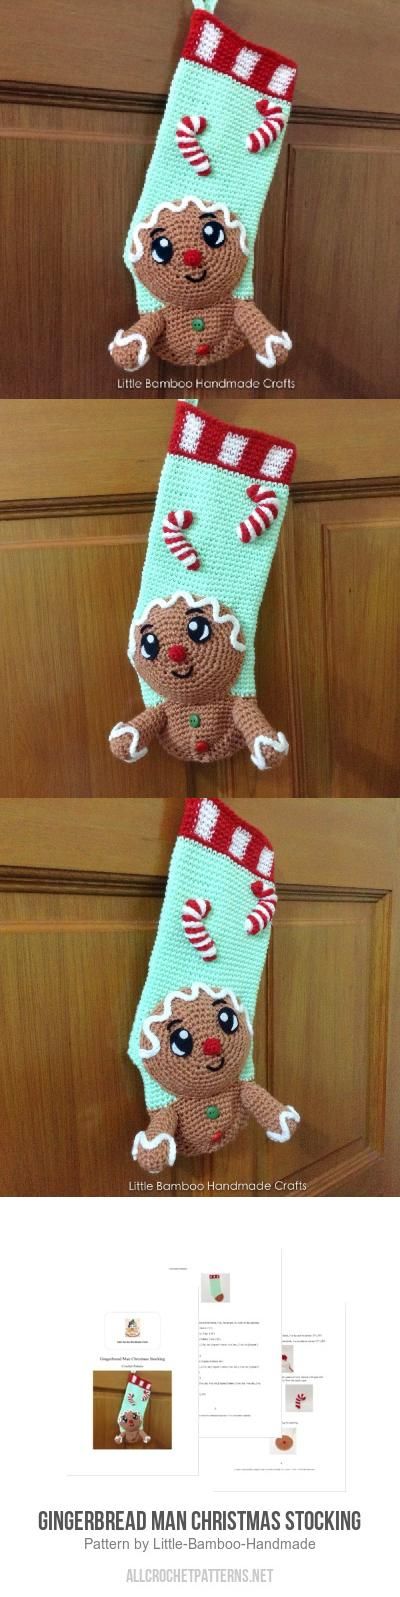 Gingerbread Man Christmas Stocking crochet pattern